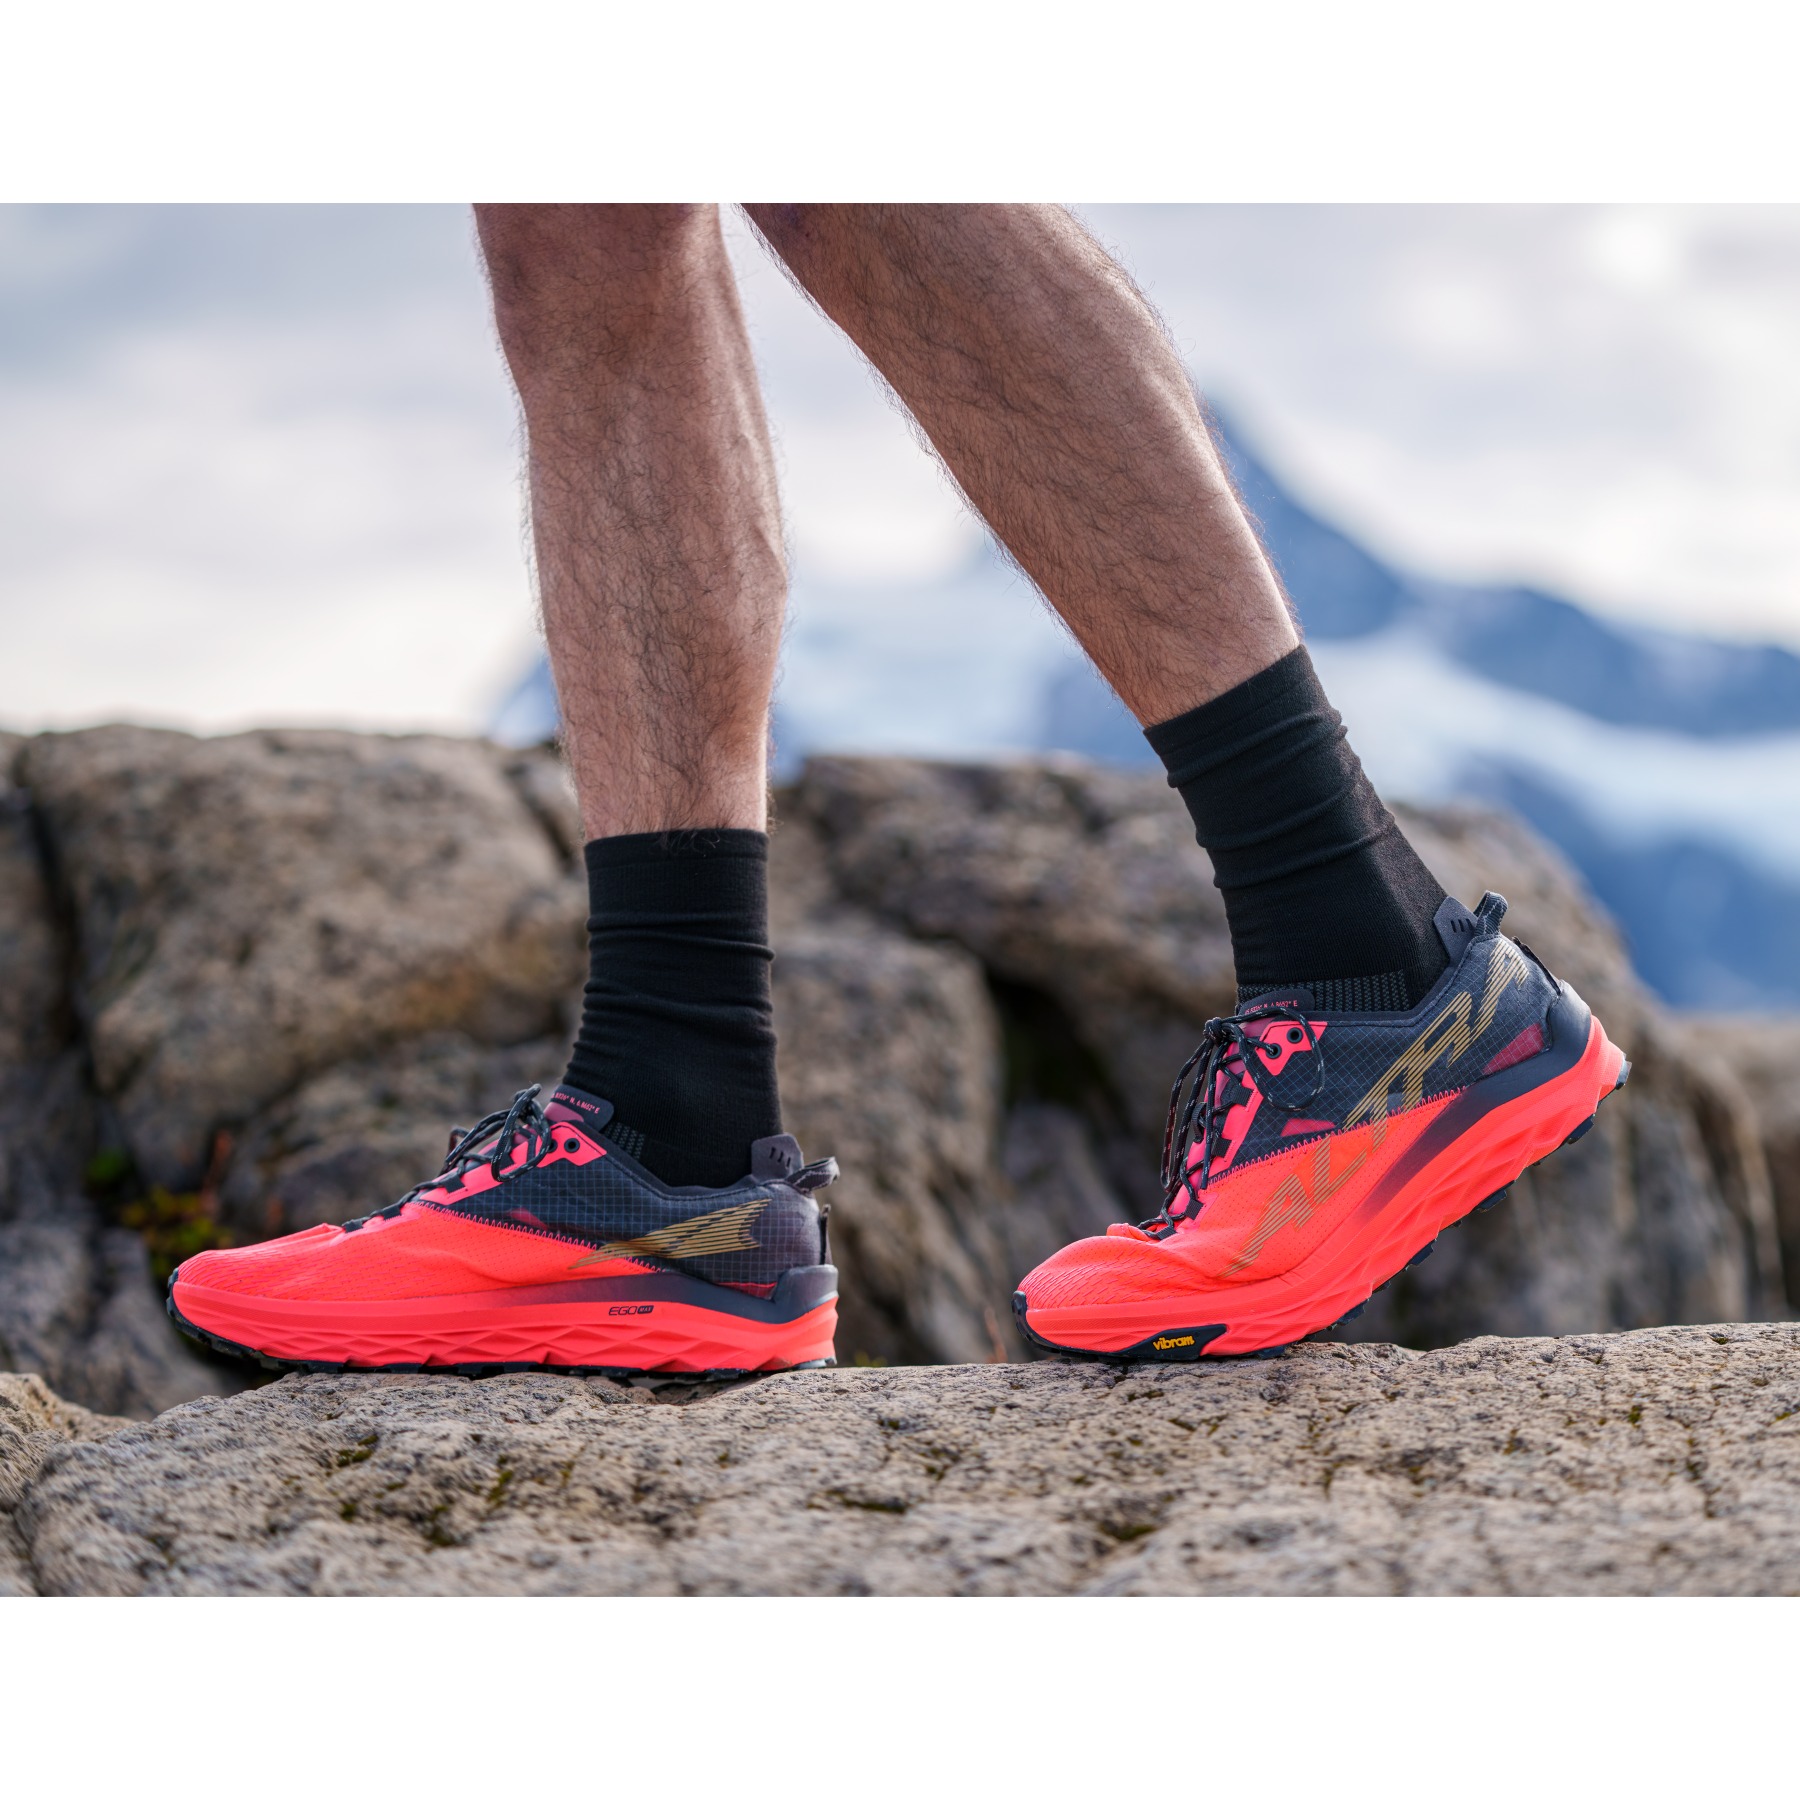 Altra Mont Blanc Trail Running Shoes Men - Coral/Black